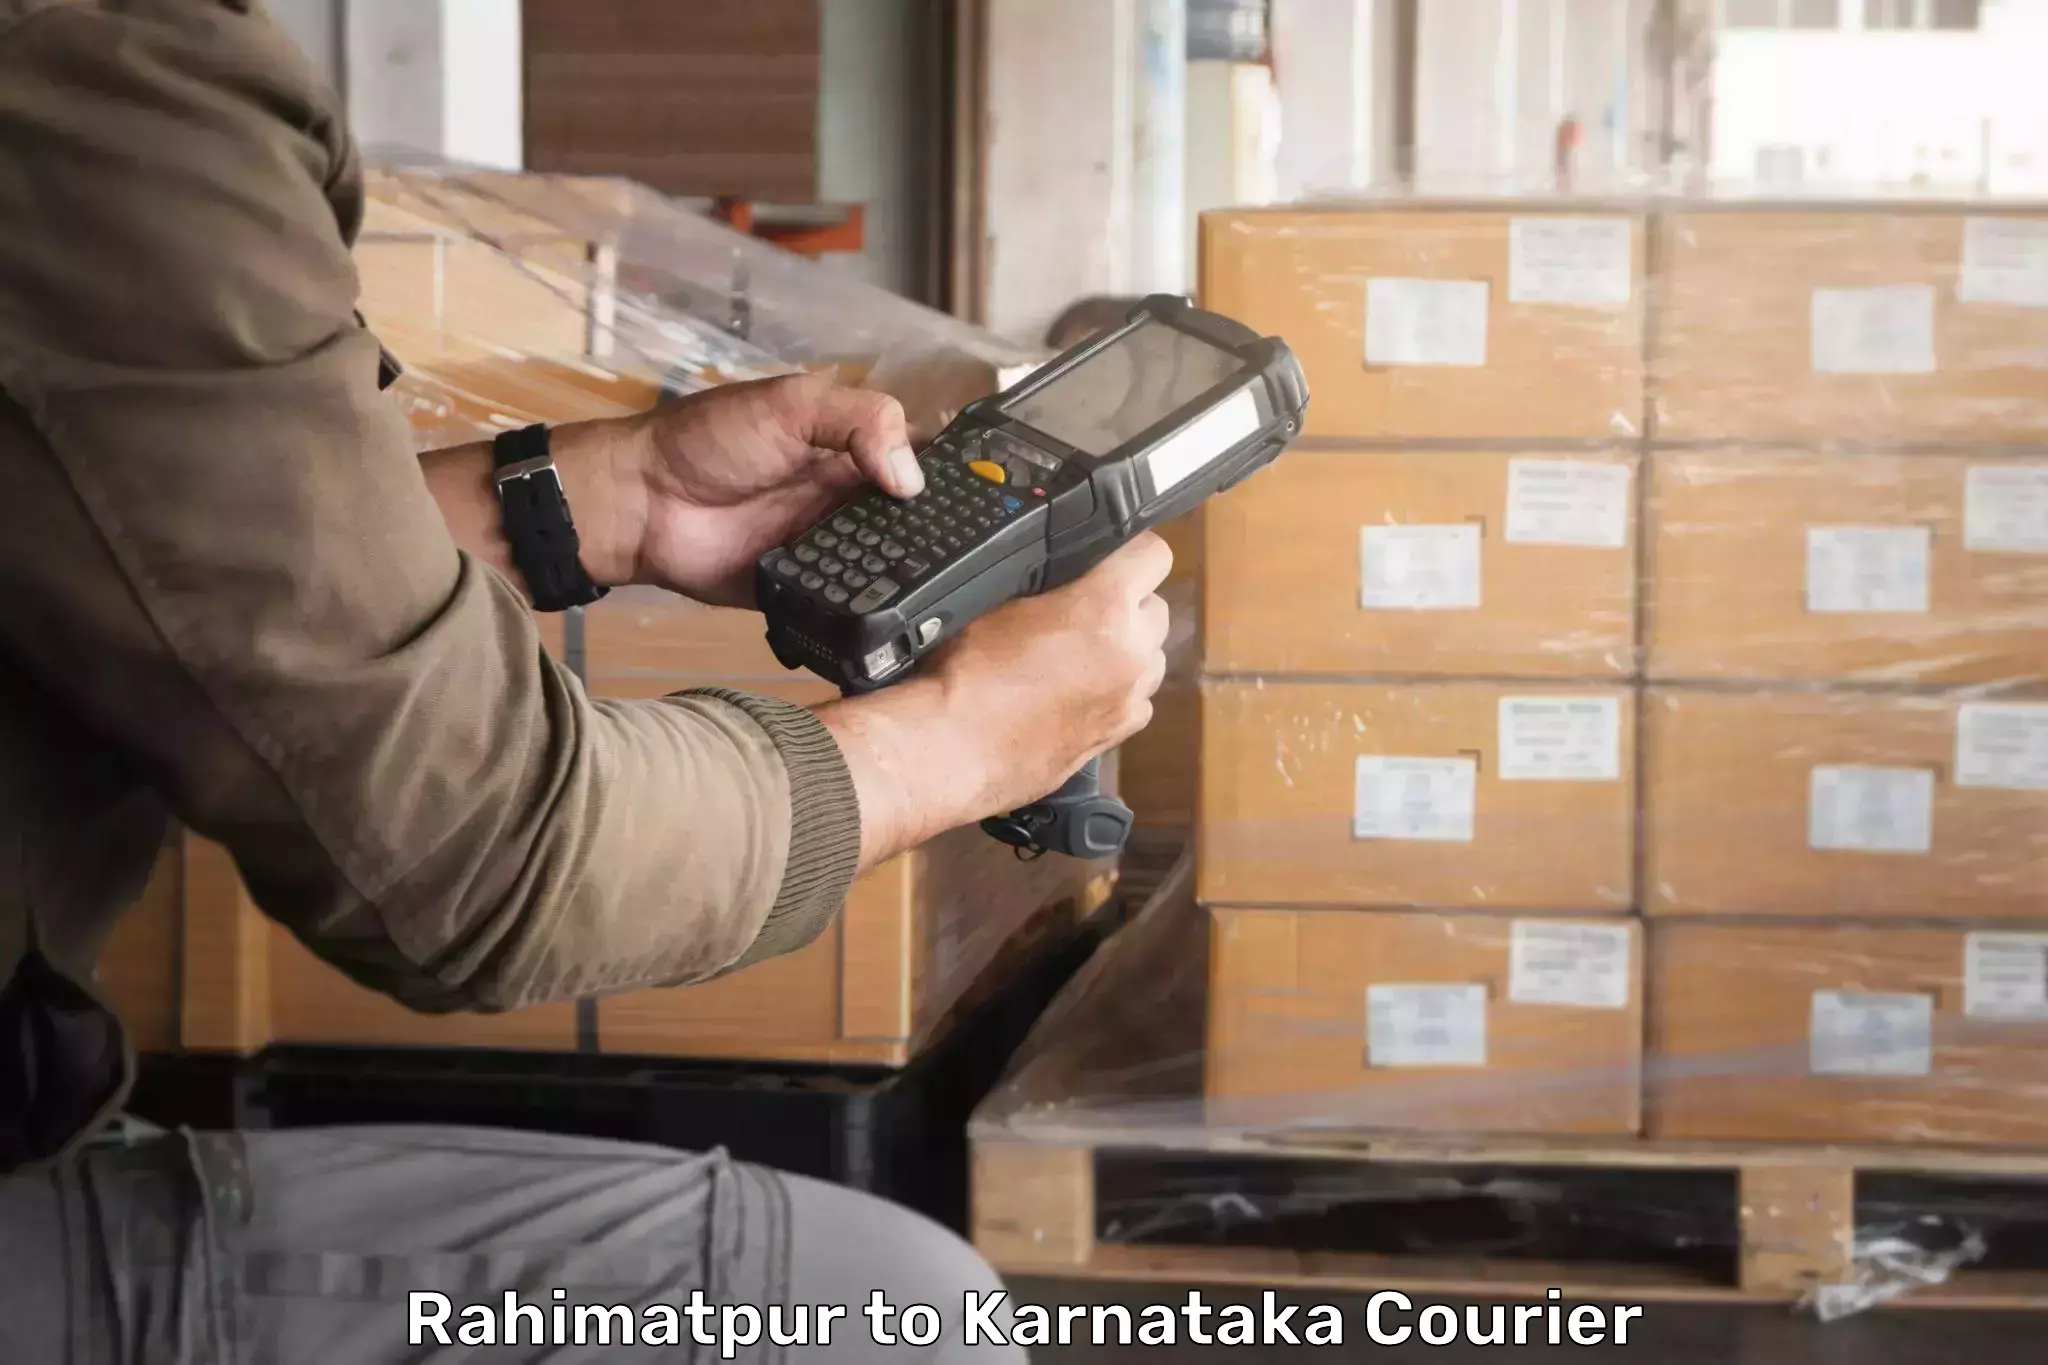 Easy return solutions Rahimatpur to Karnataka